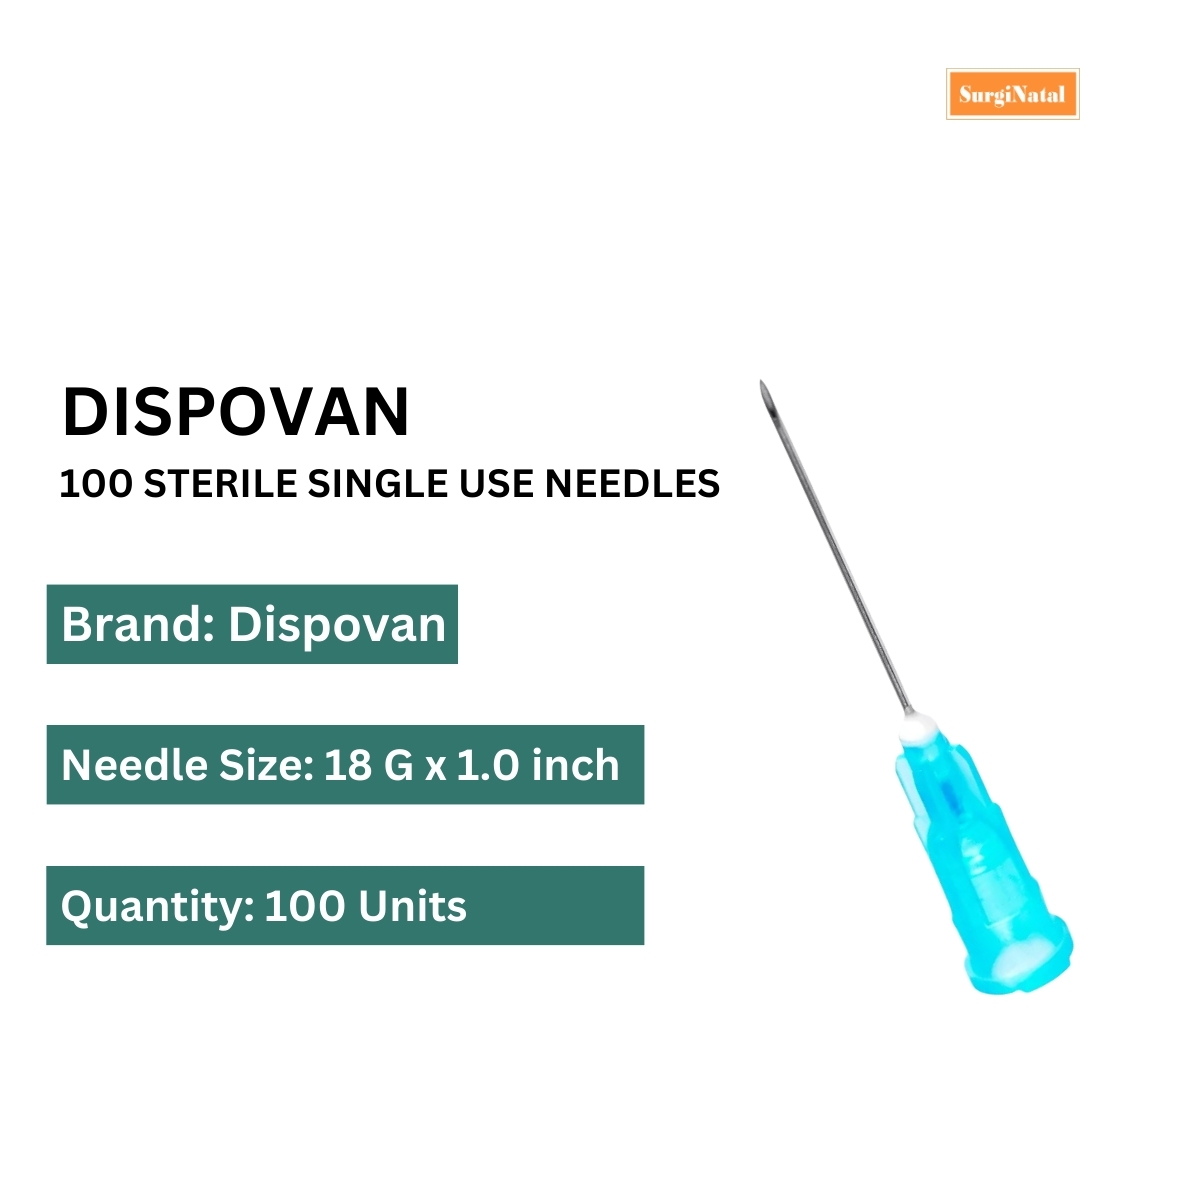 dispo van hypodermic needle - 18g*1.0 inch - 100 units pack